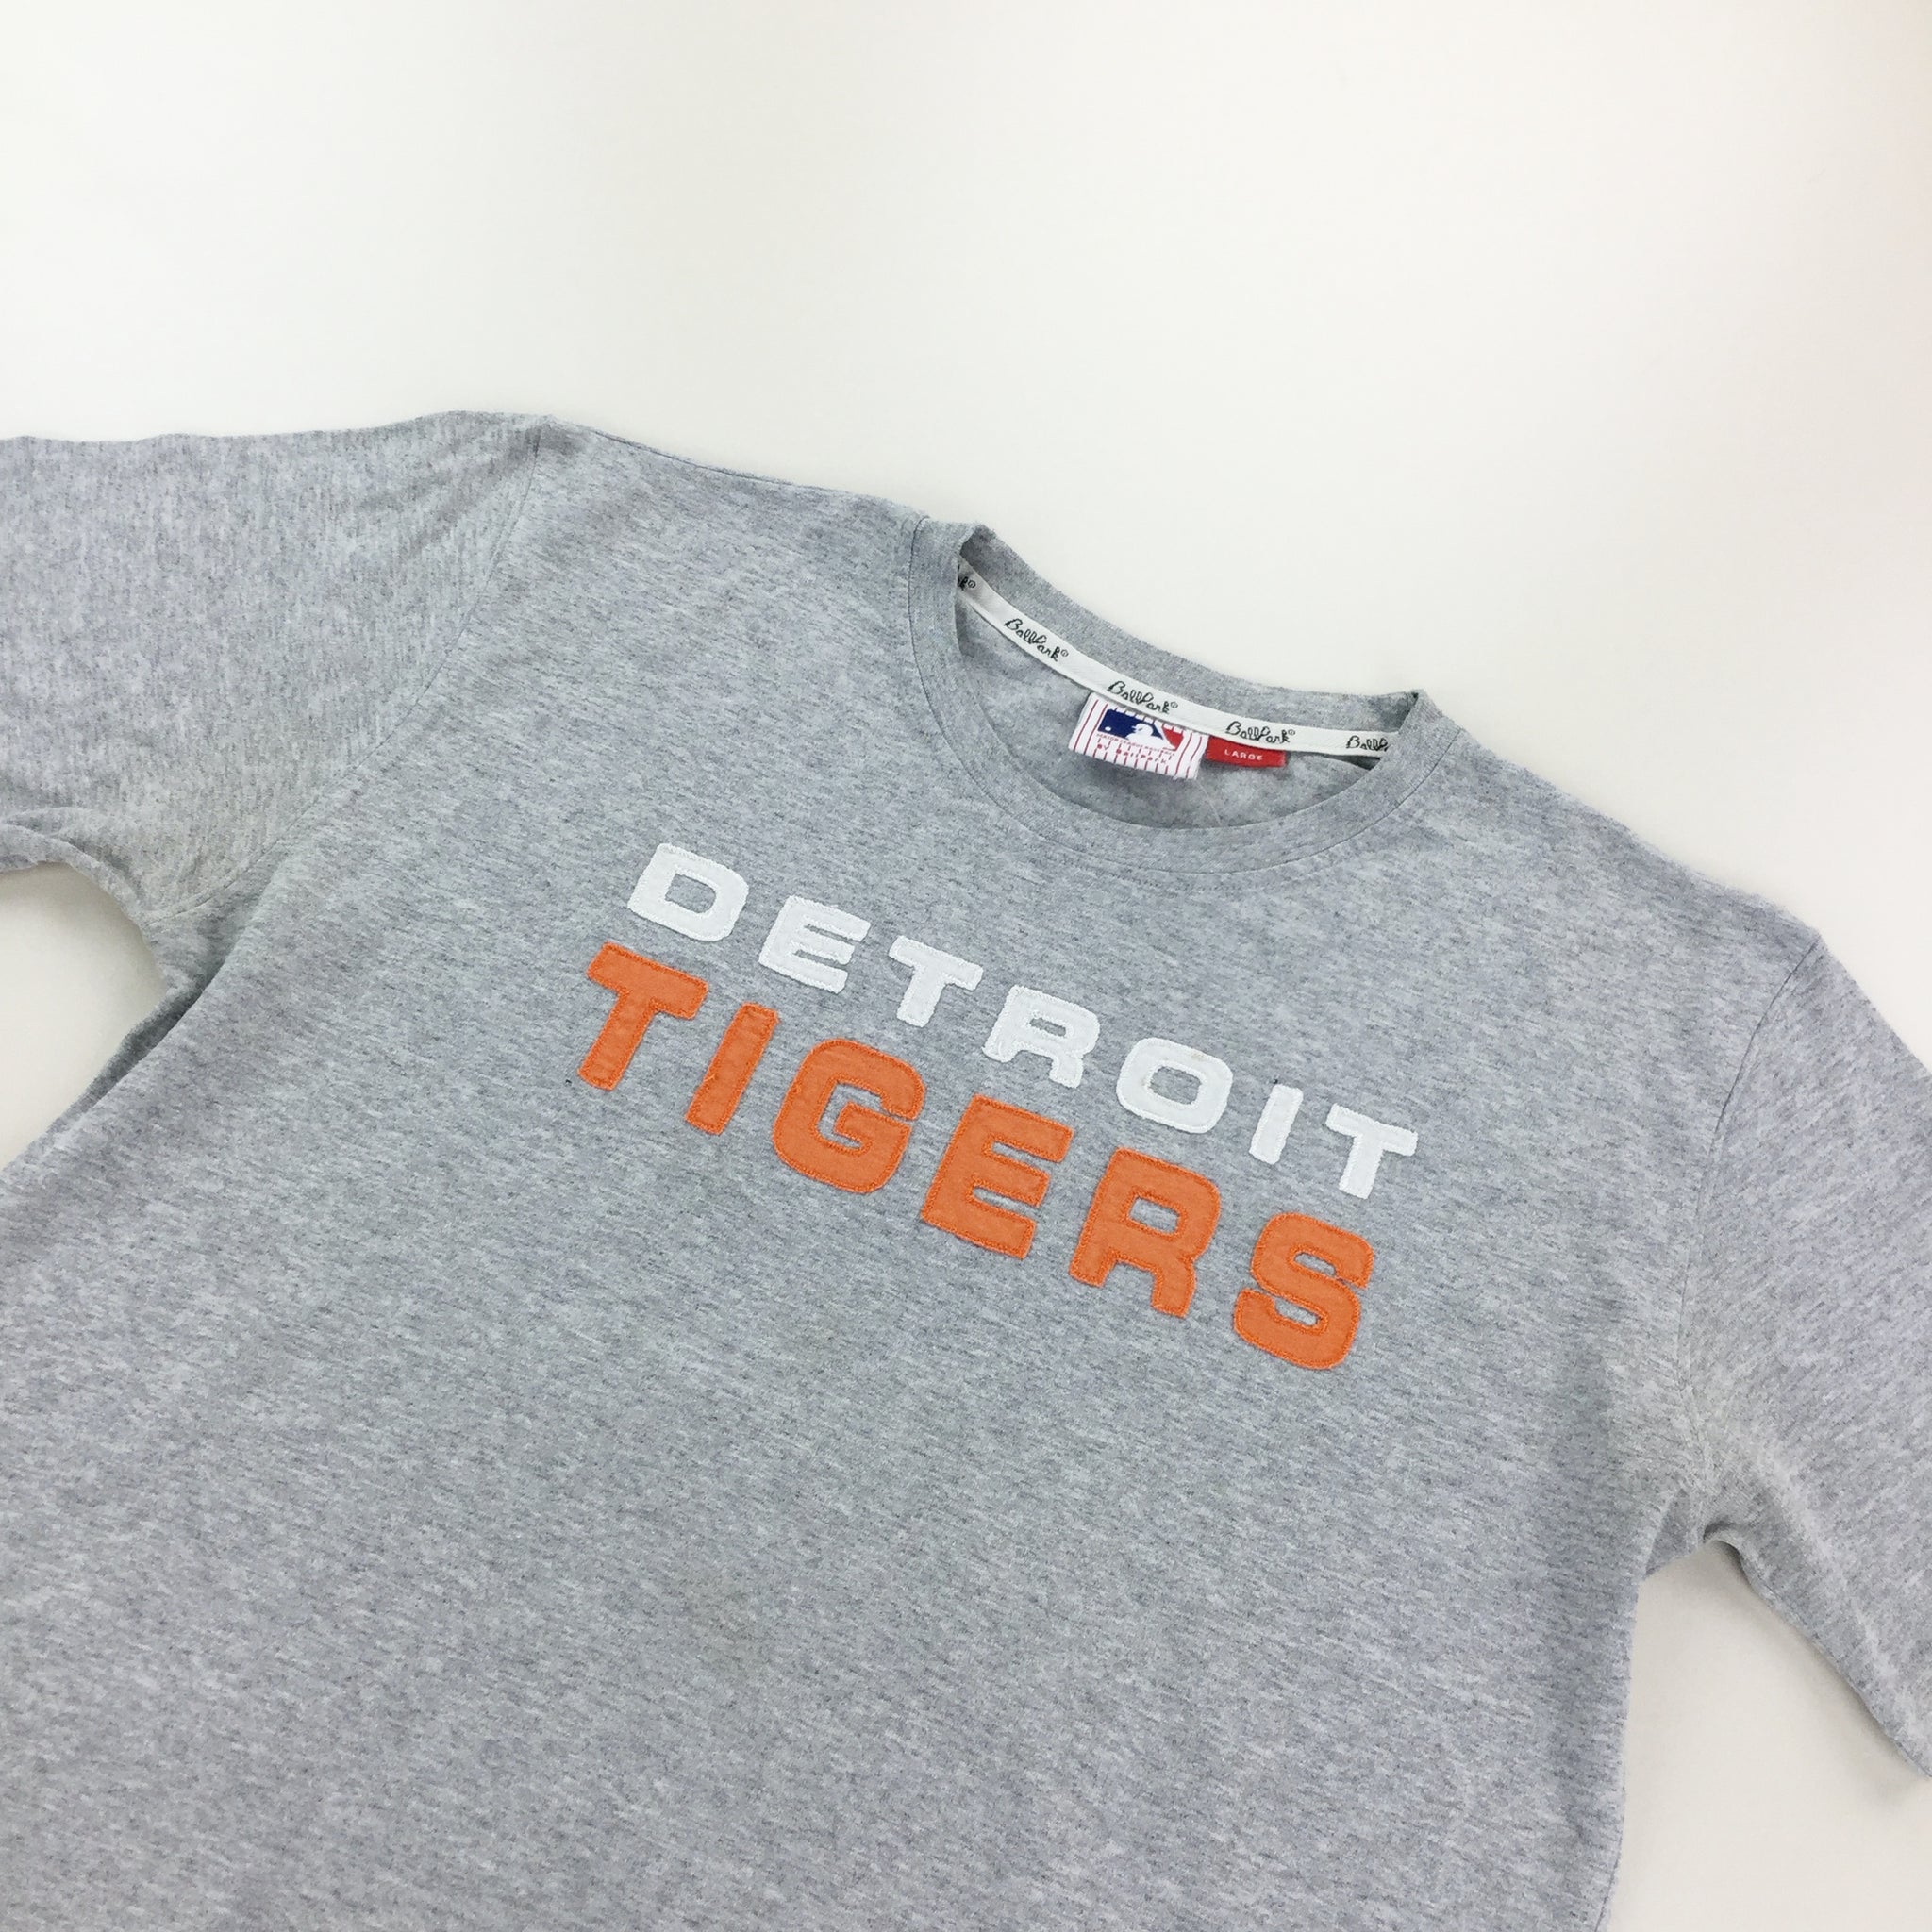 Baseball Detroit Tigers T-Shirt - Large